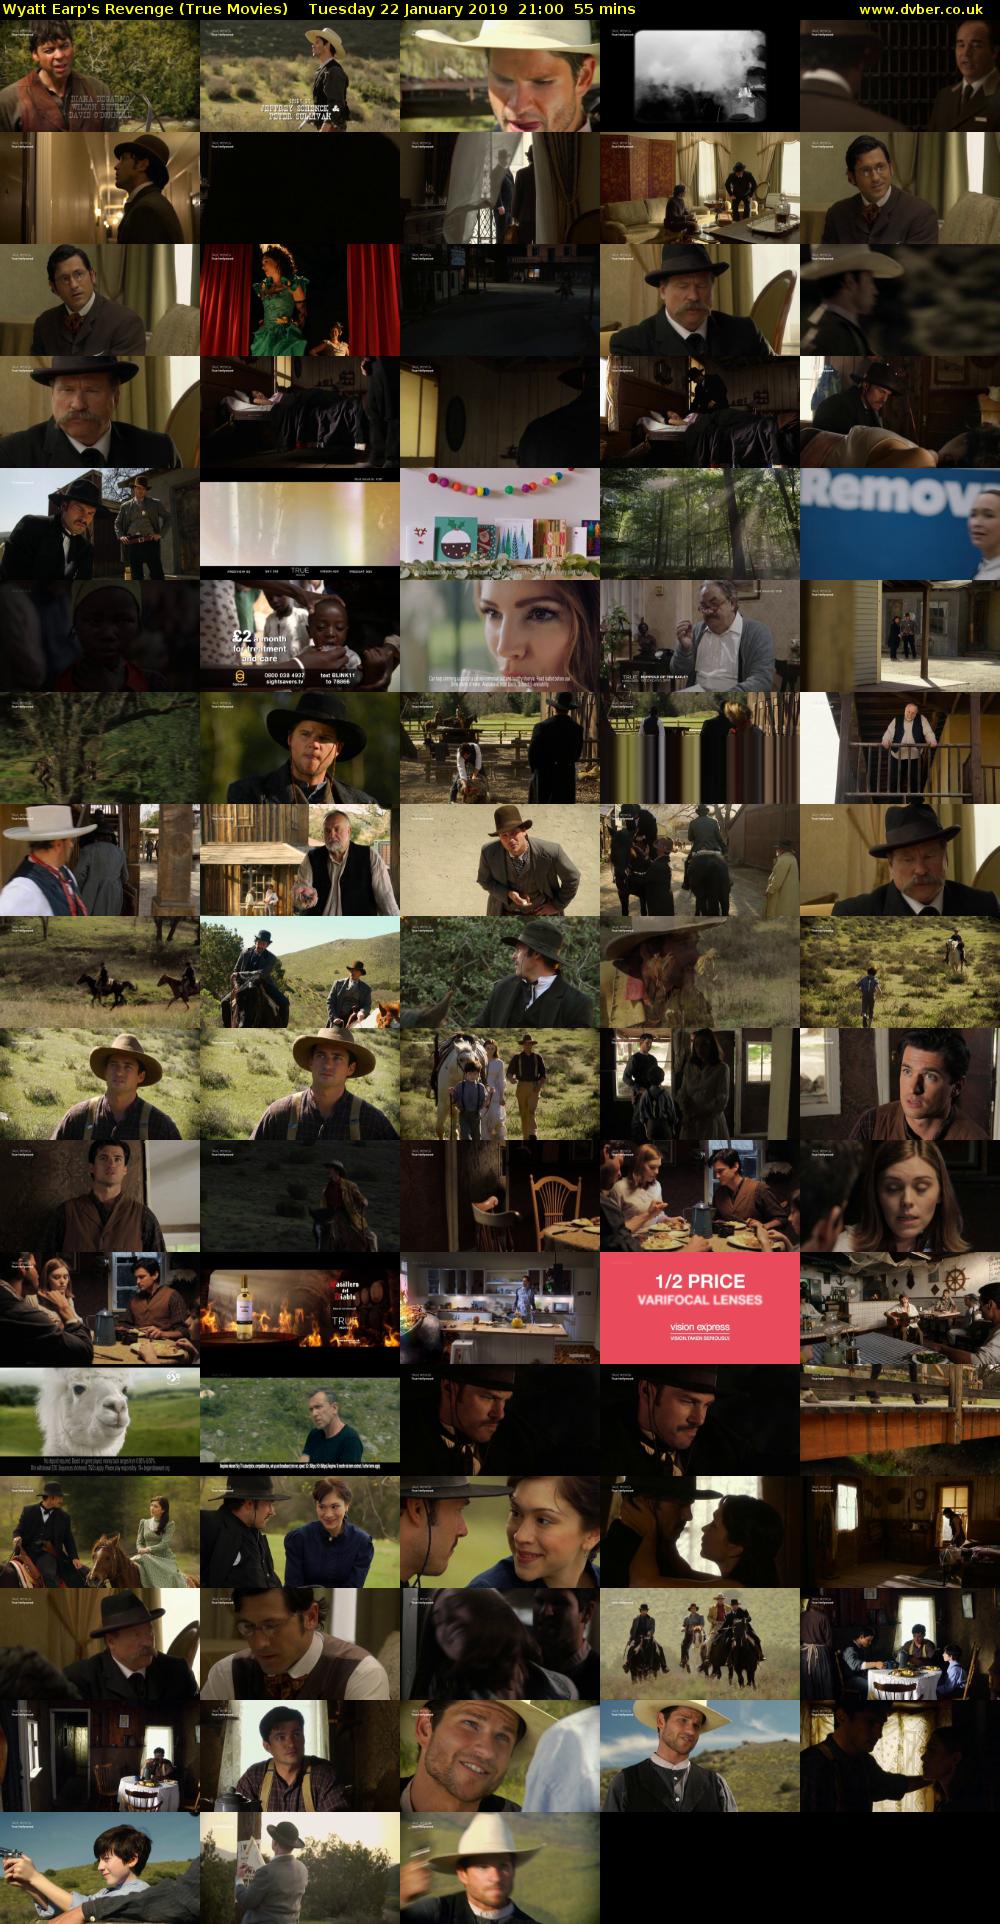 Wyatt Earp's Revenge (True Movies) Tuesday 22 January 2019 21:00 - 21:55